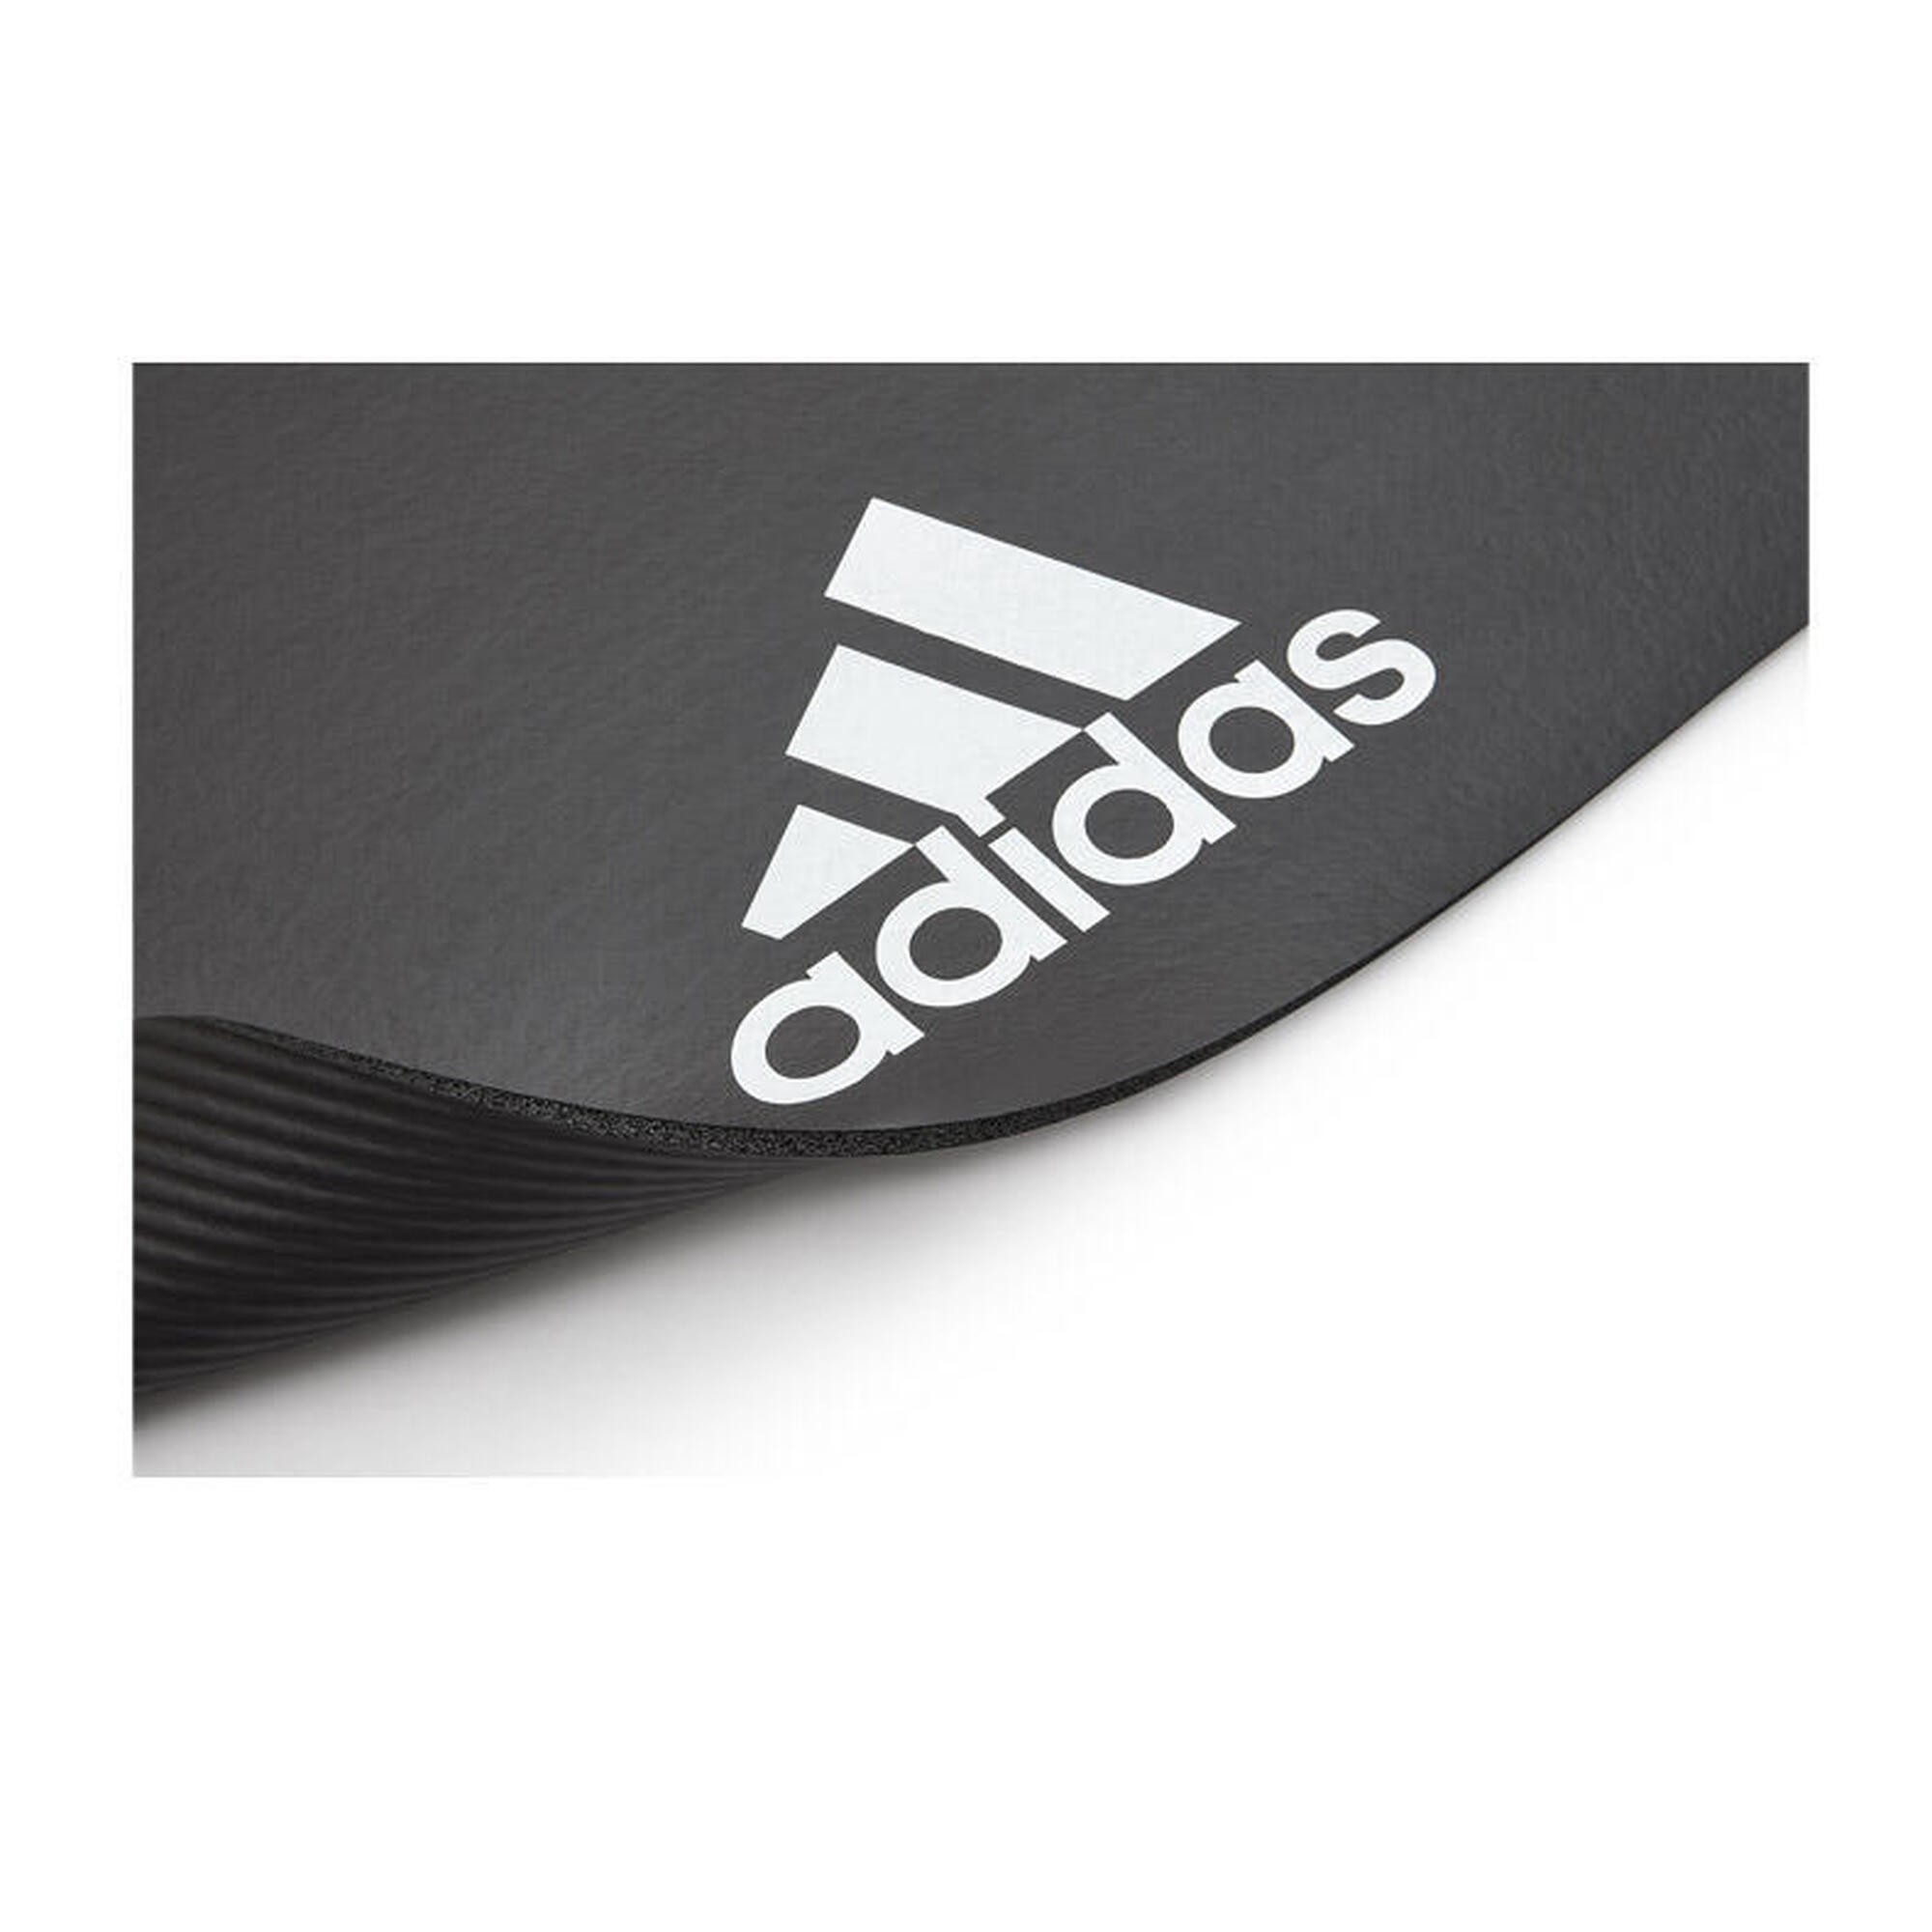 Adidas 7 mm fitnessmat - Grijs